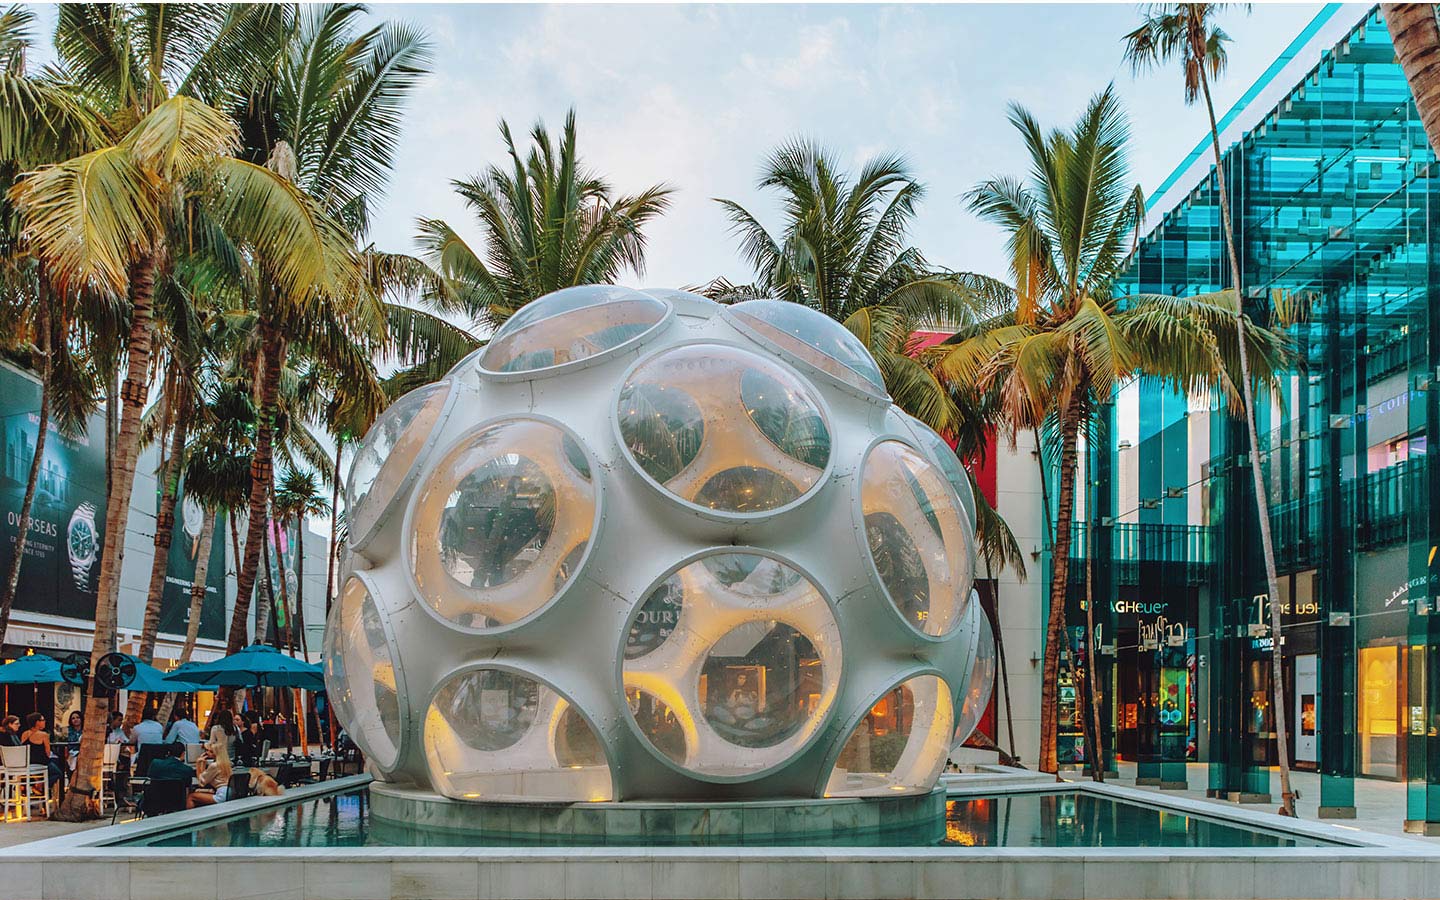 Buckminster Fuller's Fly Eye Dome in the Miami Design District